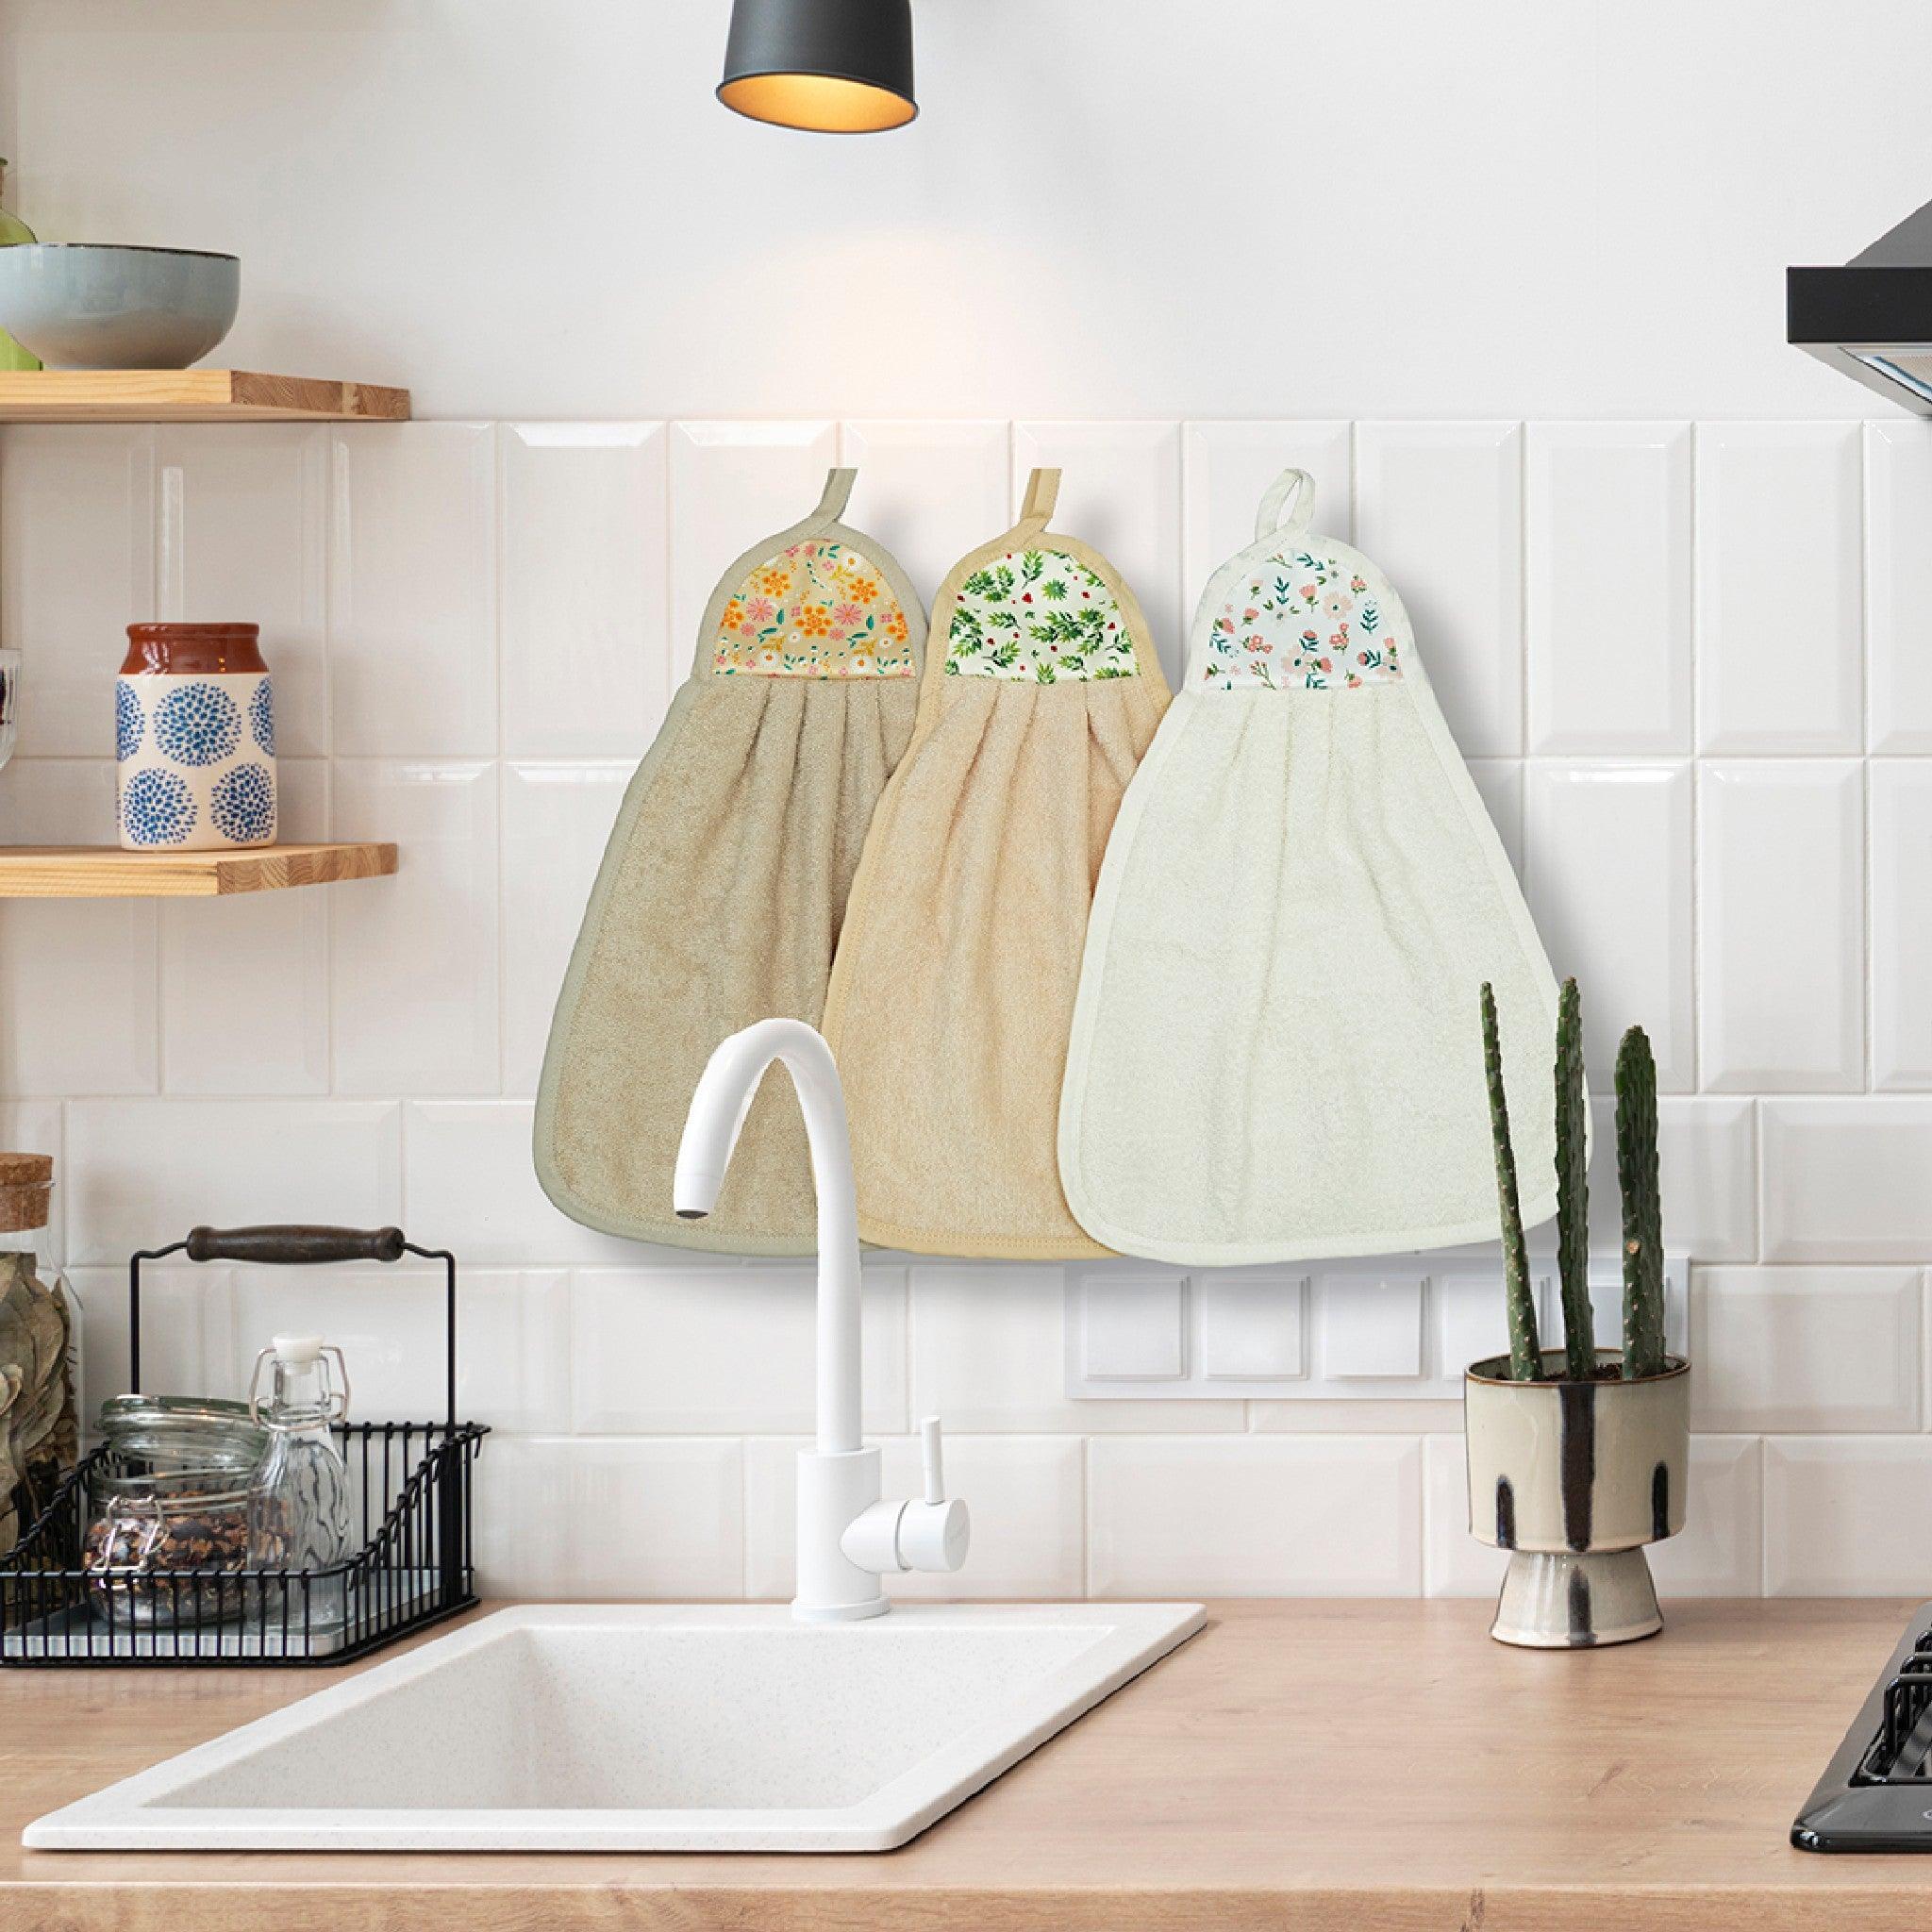 Wash Basin/Kitchen Hanging Hand Towels Set - Rangoli